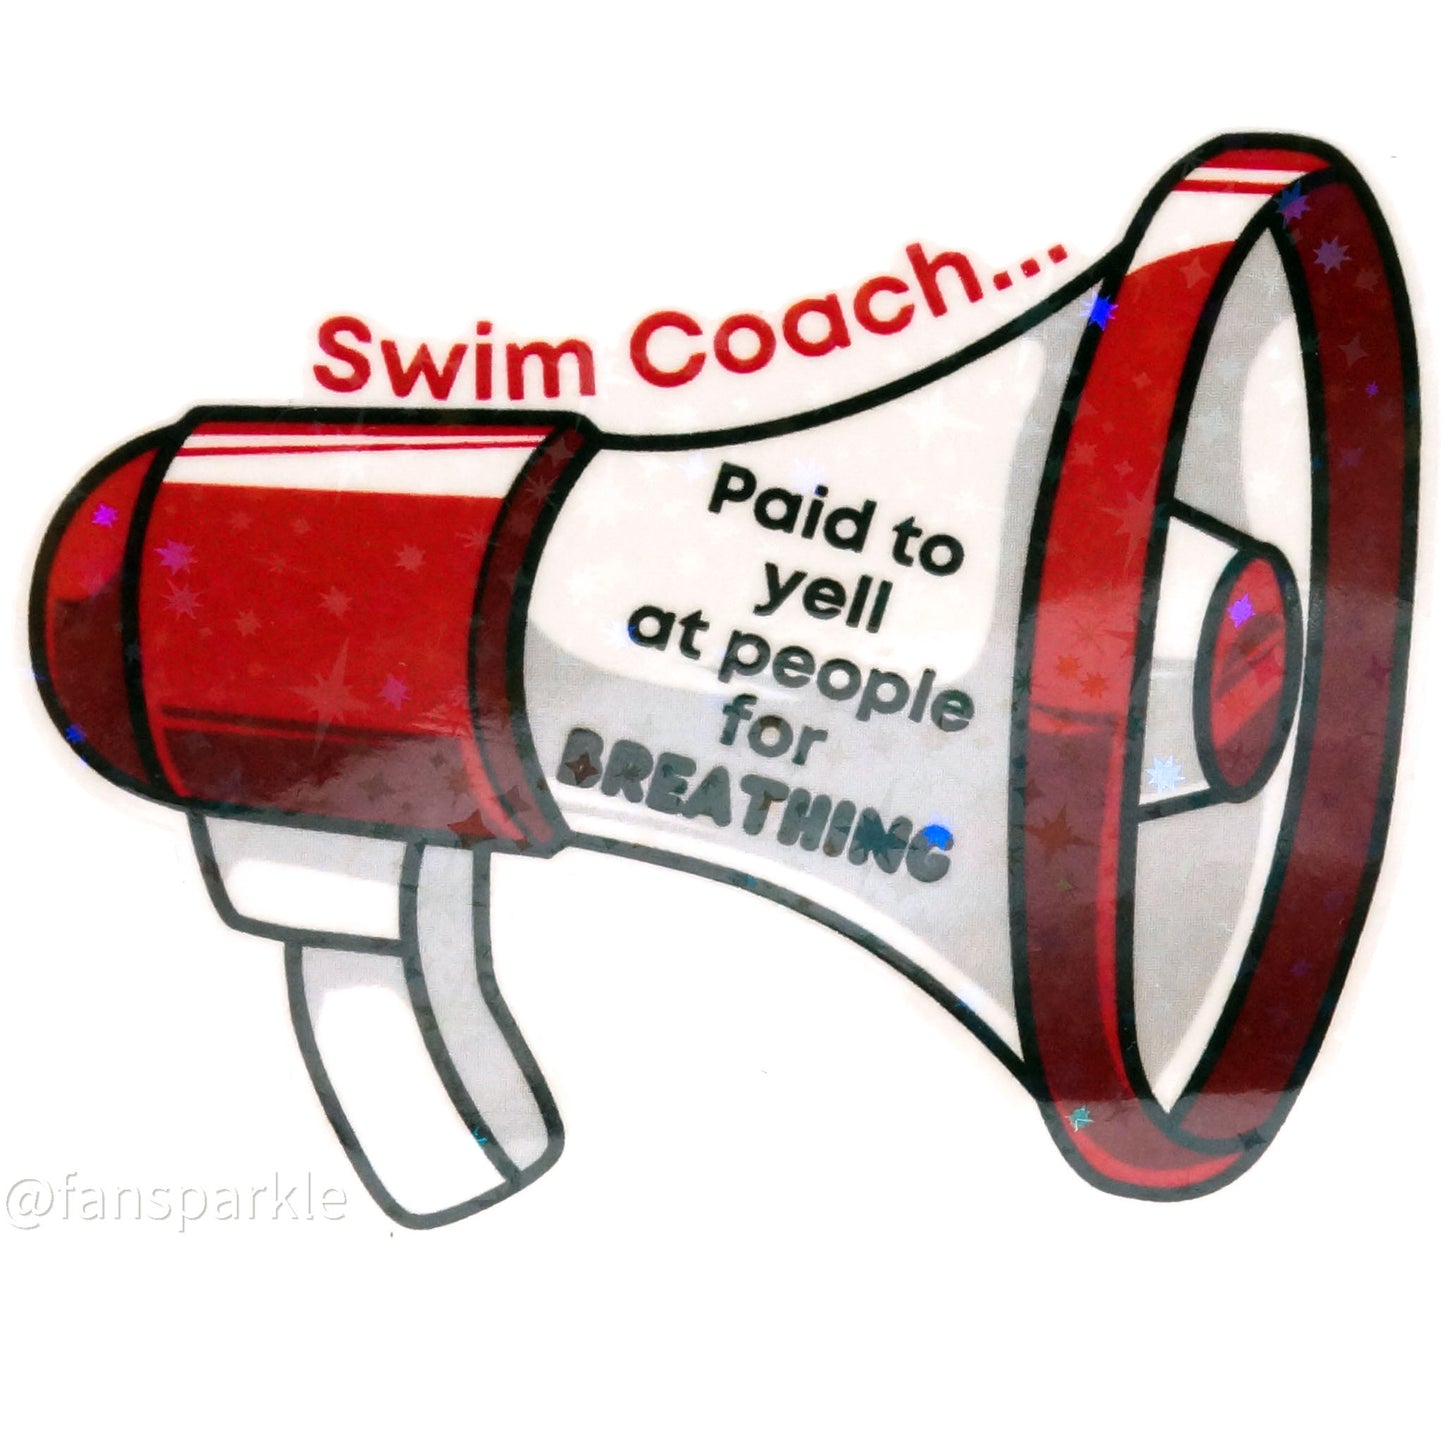 Swim Coach Sticker - Fan Sparkle